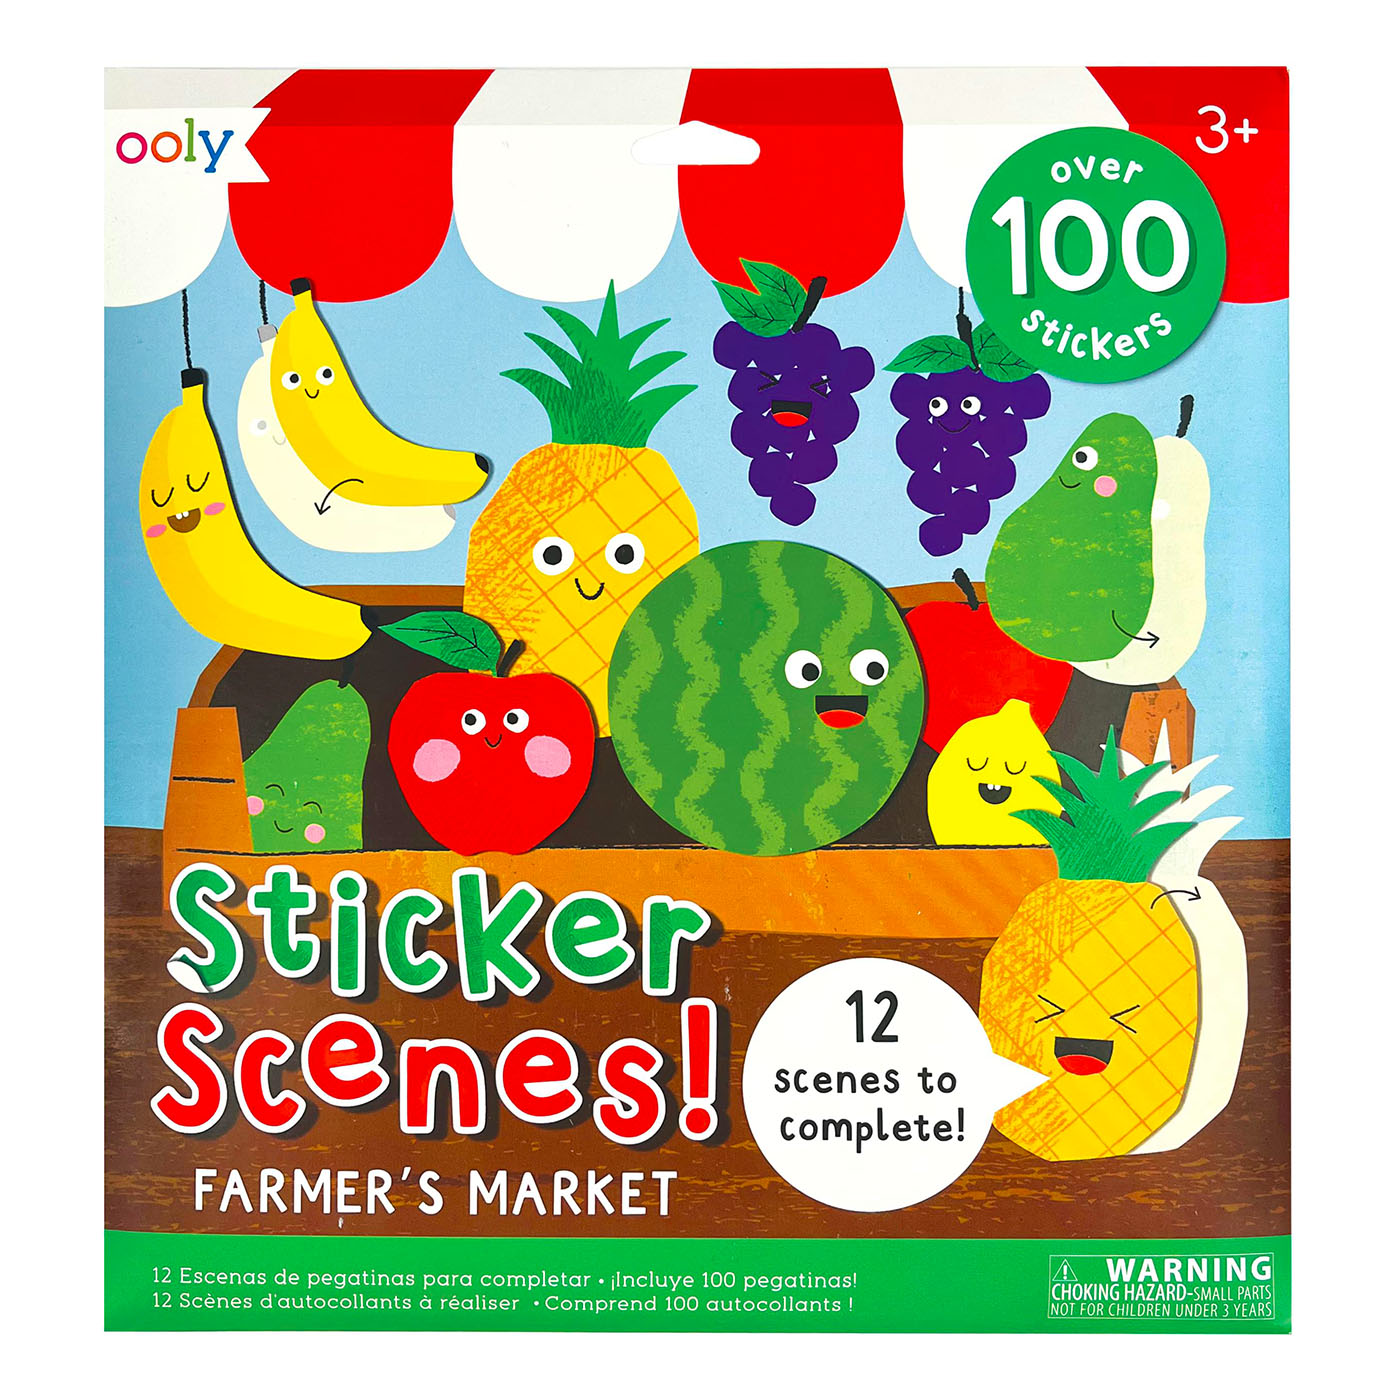  Ooly Sticker Scenes Çıkartma Sahnesi - Farmer's Market